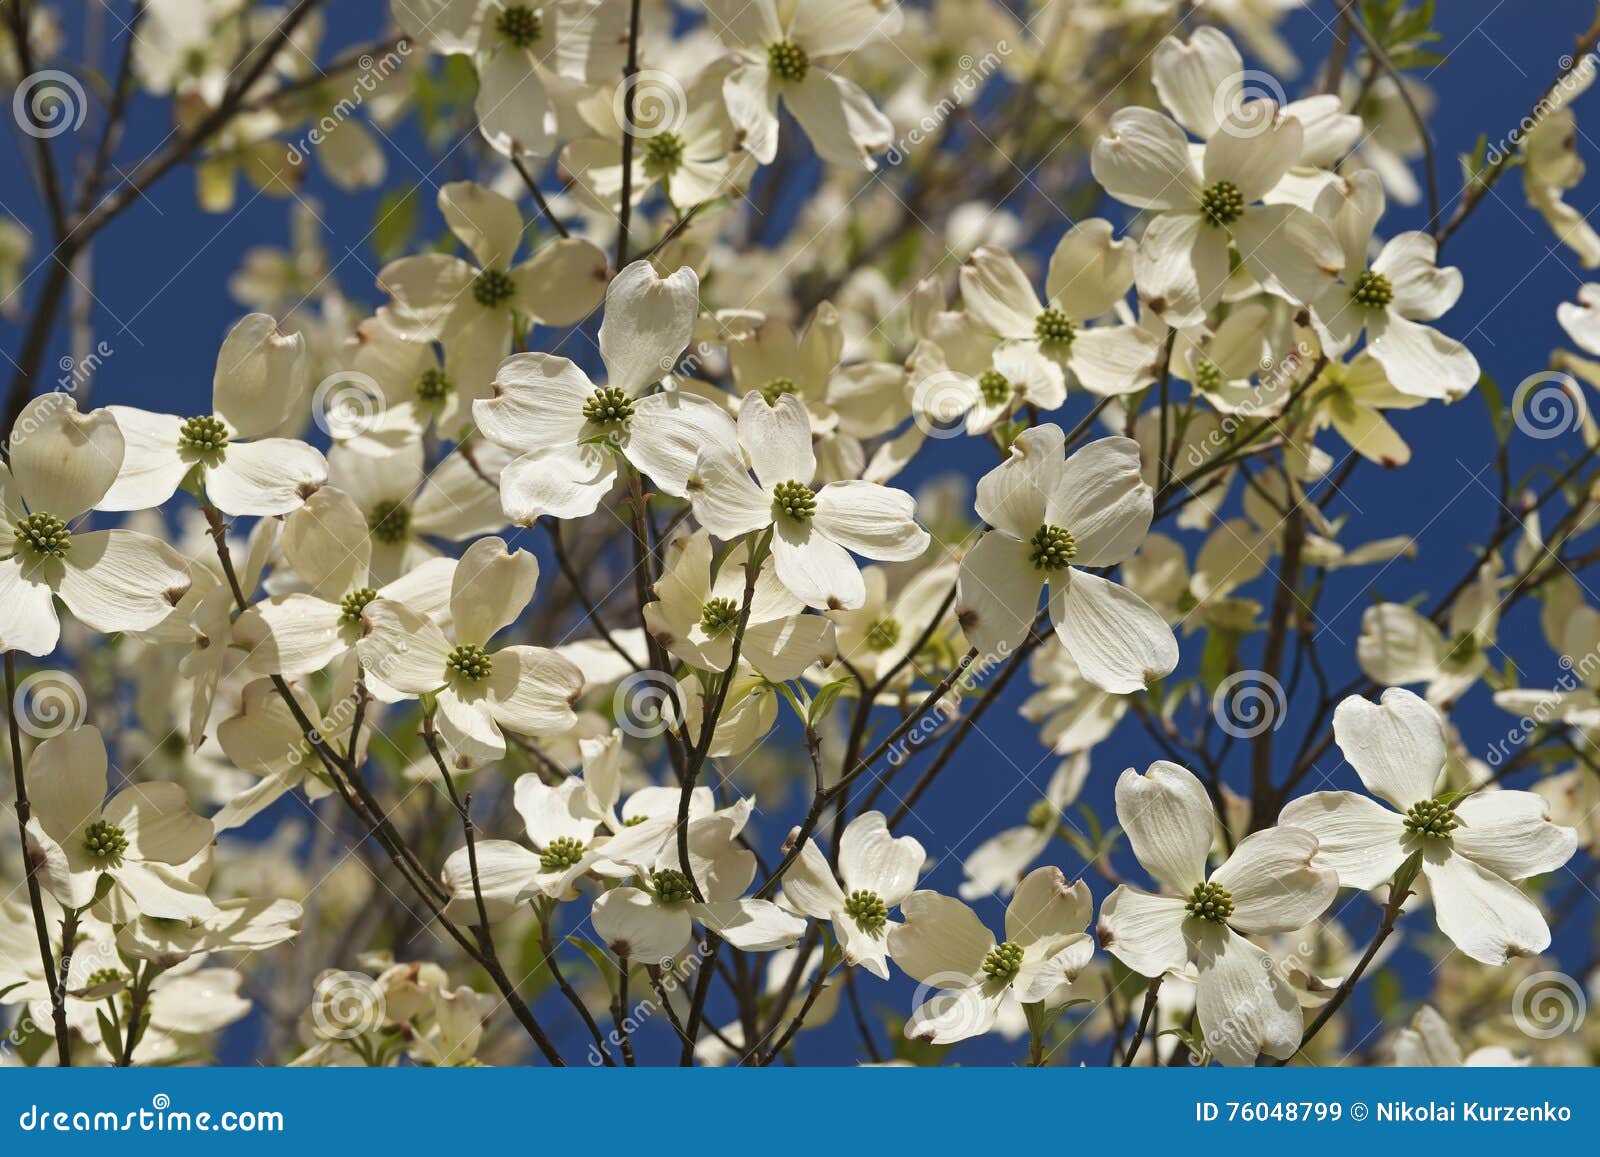 flowering dogwood flowers